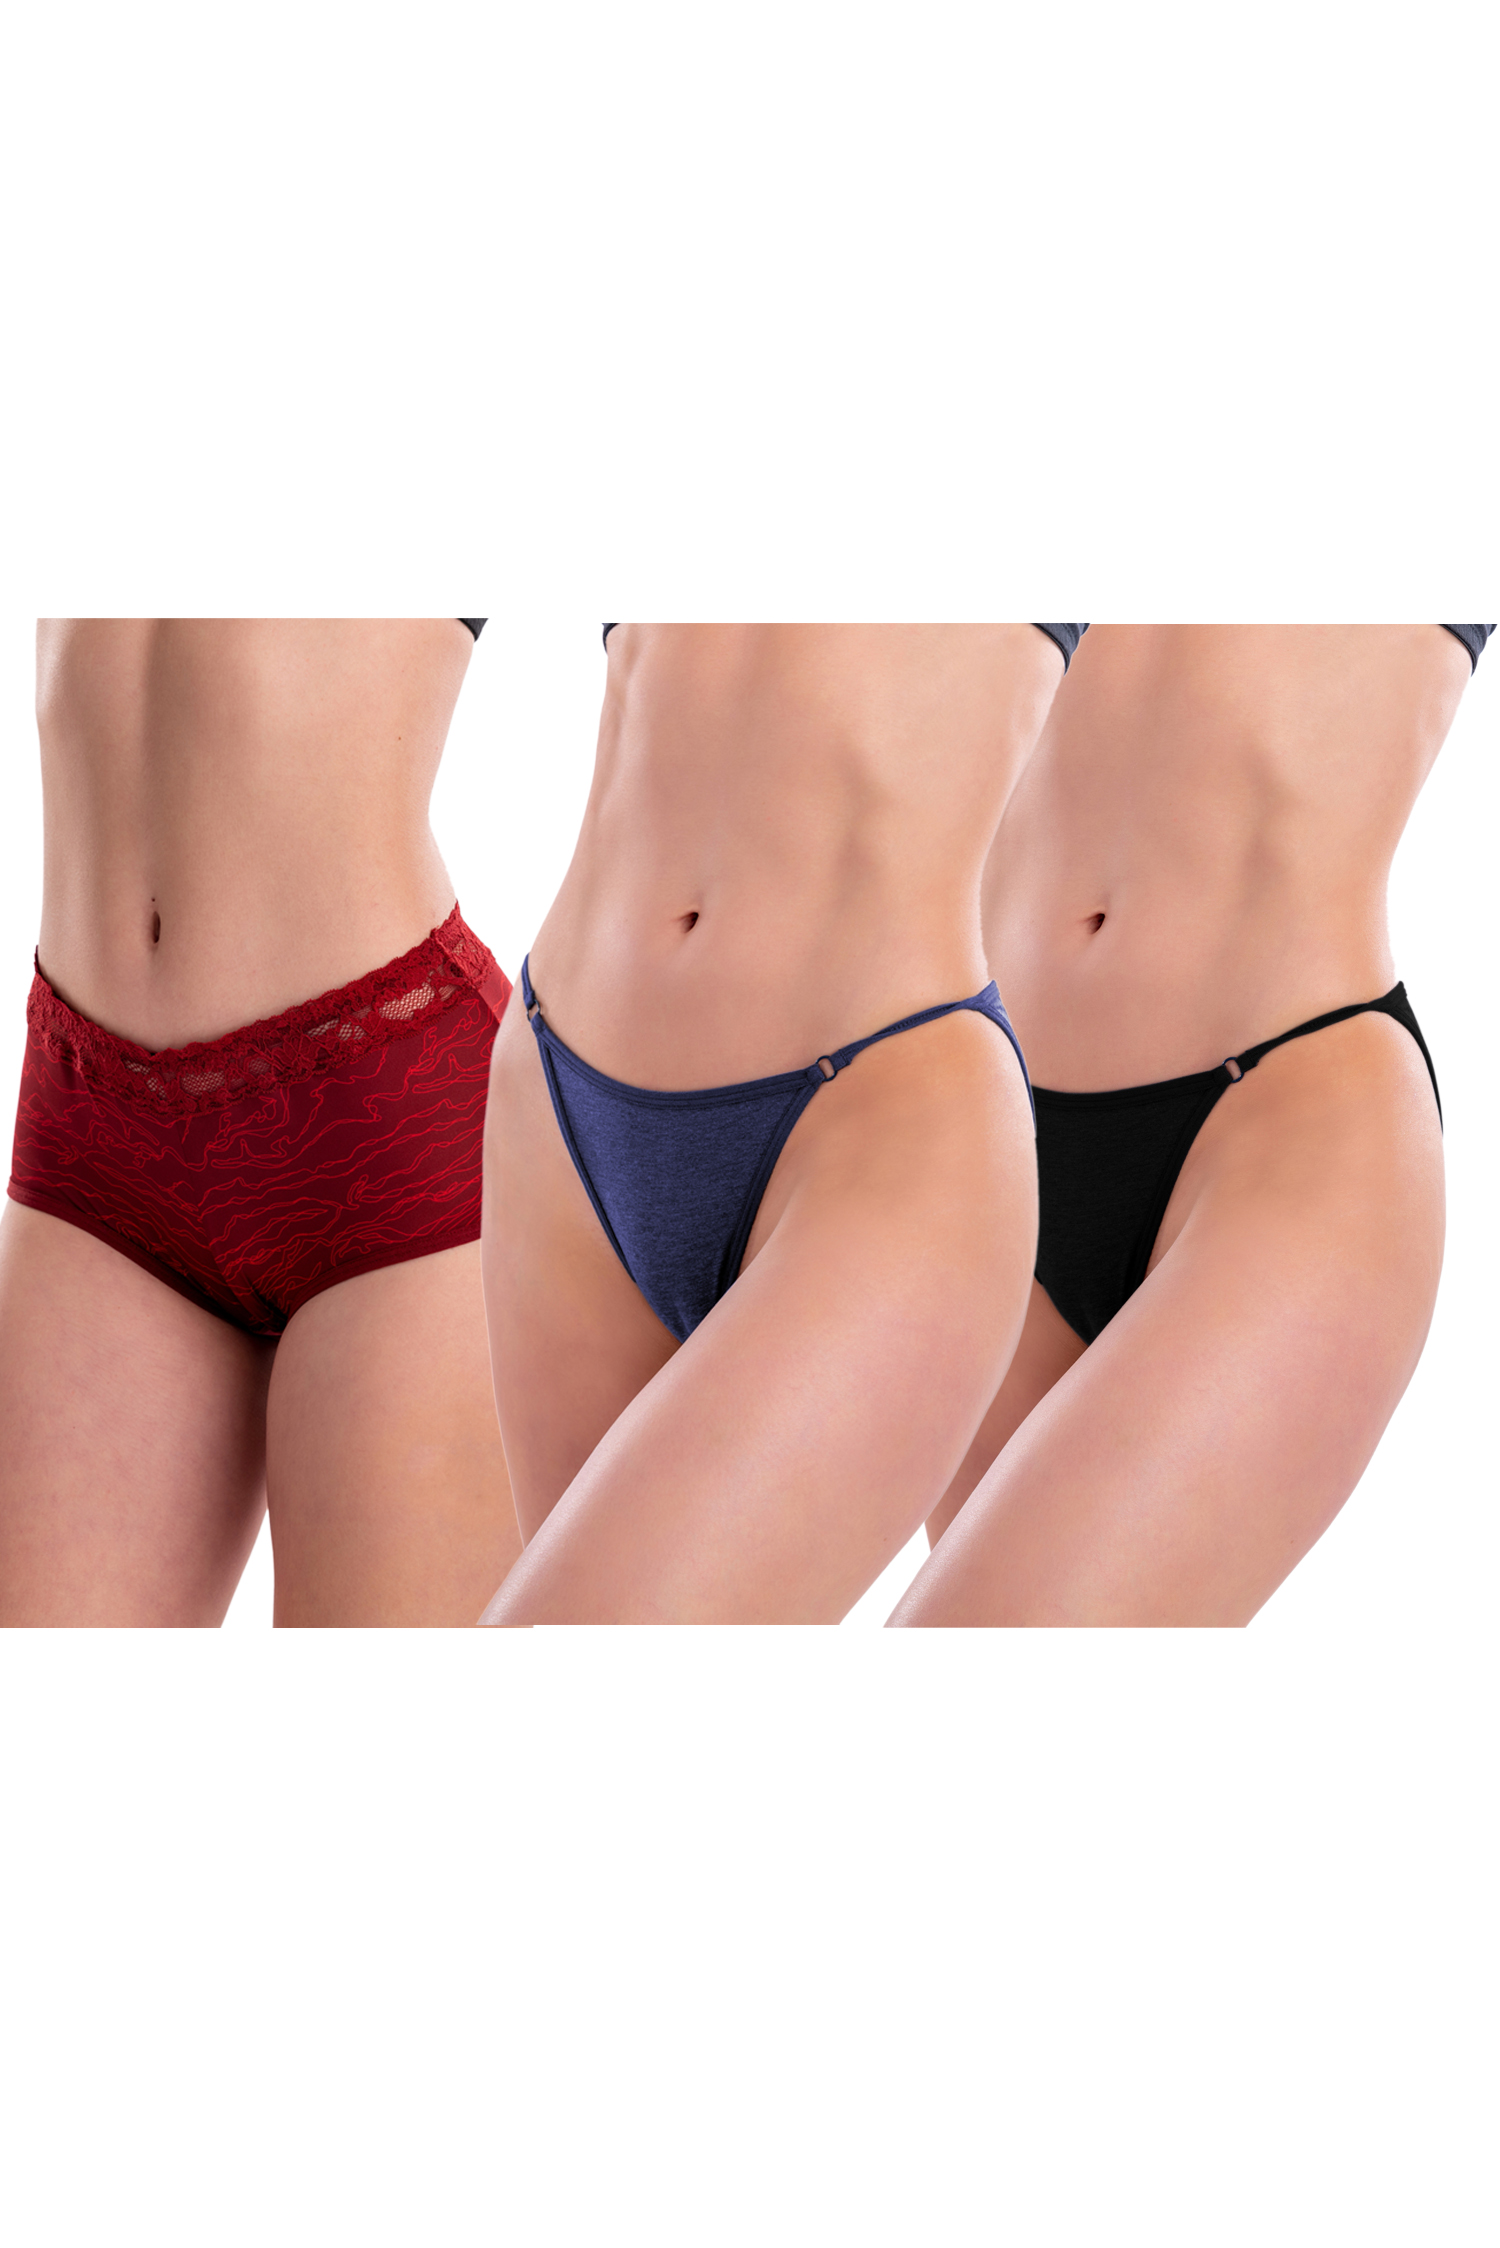 Women Bikini Lacy Red , Blue & Black Pantie (Pack of 3)